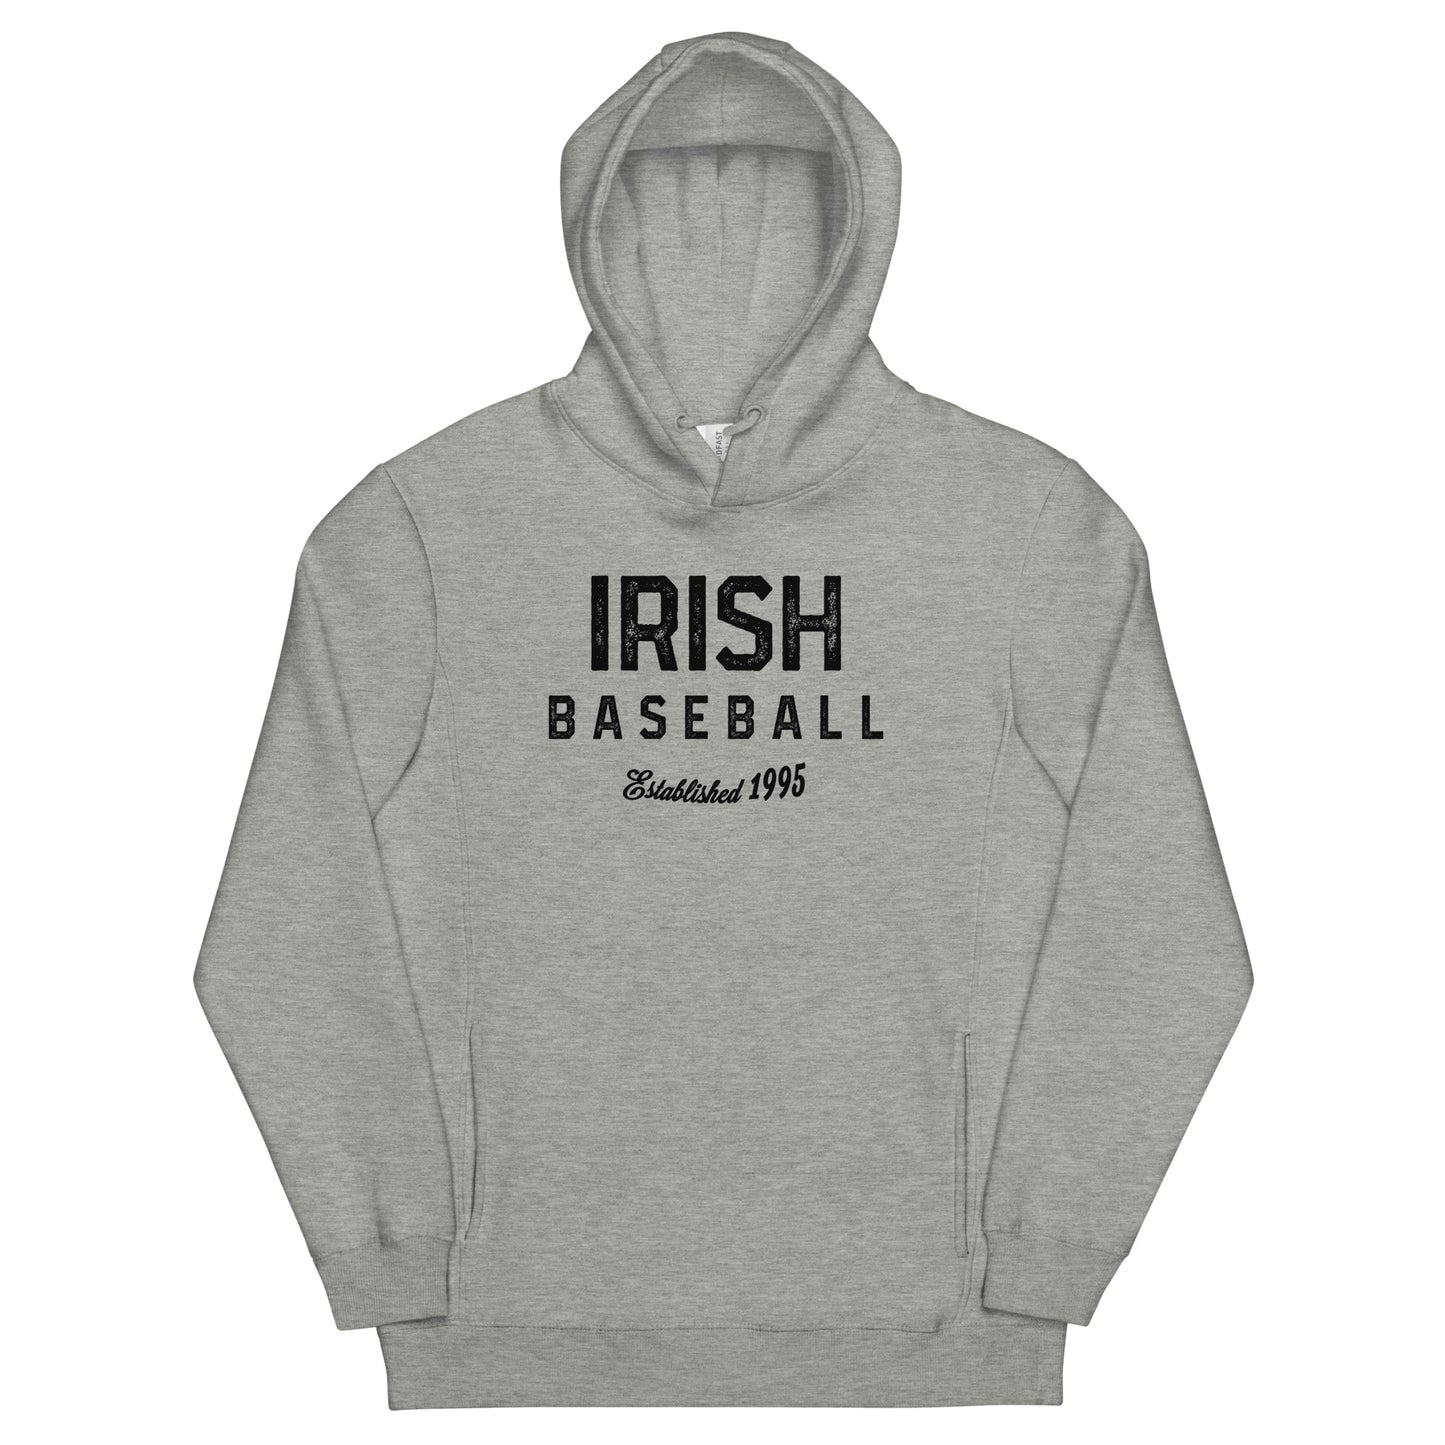 IRISH BASEBALL_EST 1995Unisex fashion hoodie